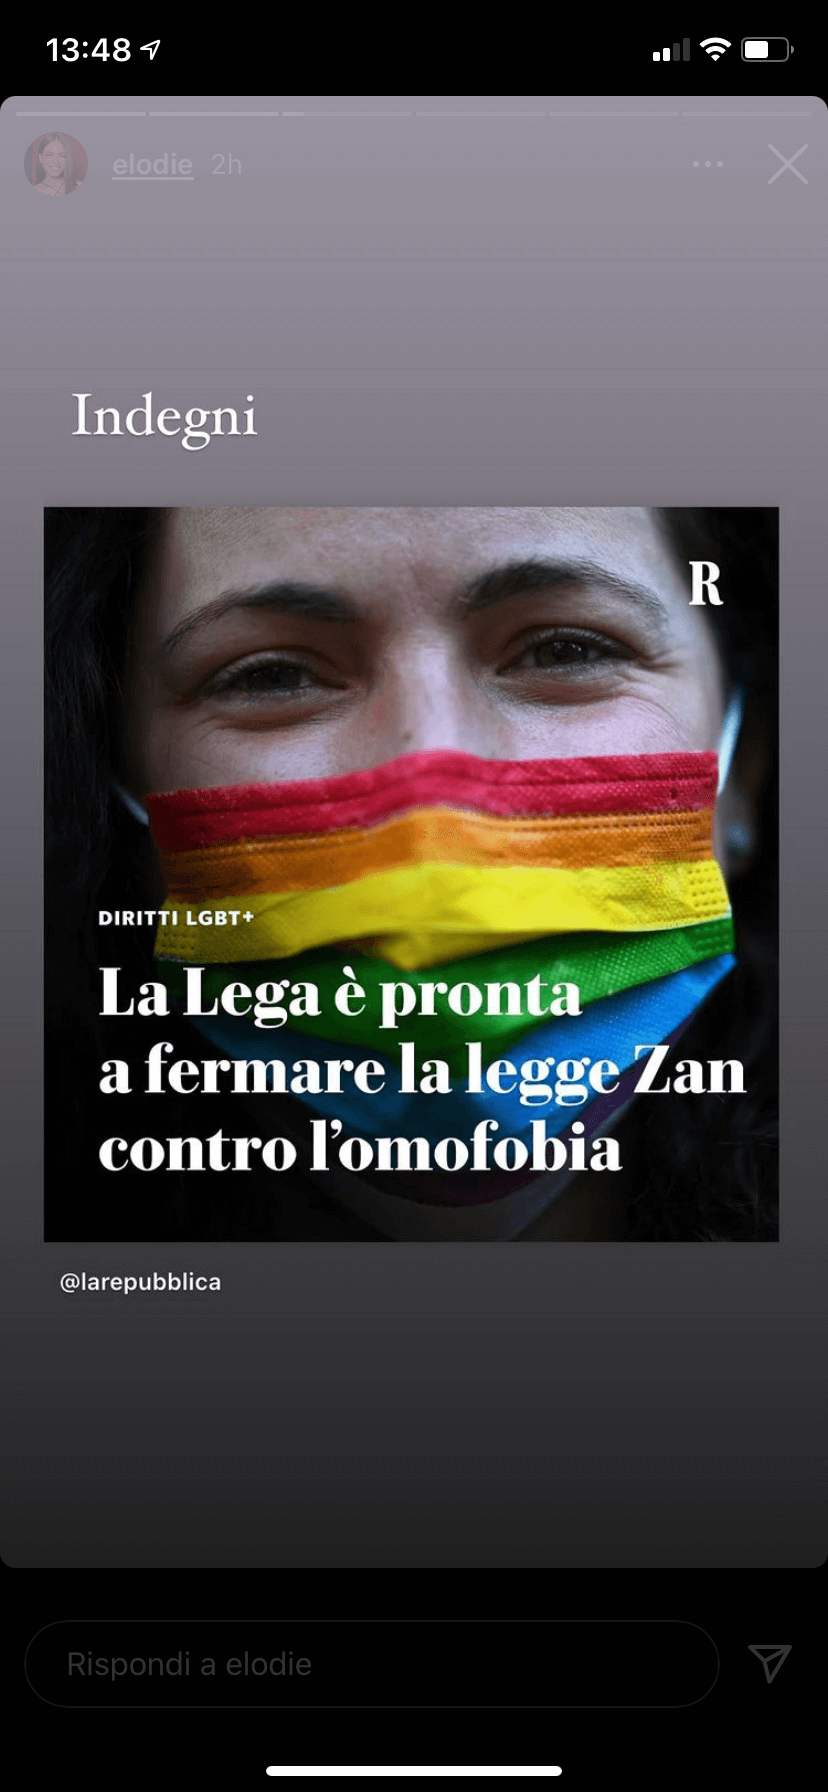 Elodie vs. Lega: "Indegni, gente omotransfobica che non dovrebbe stare in Parlamento" - Elodie vs. Lega 2 1 - Gay.it